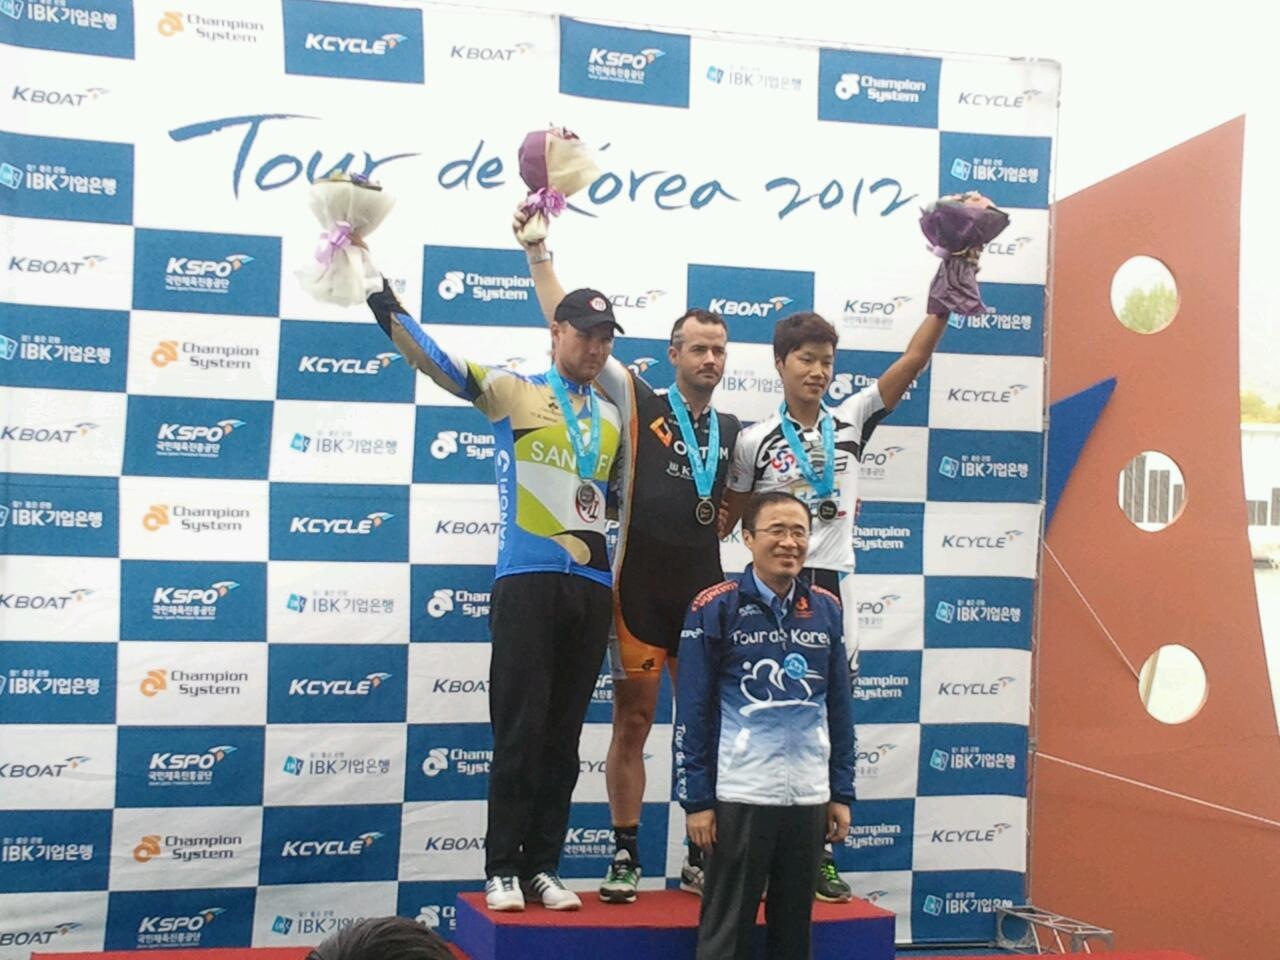 2012 Tour de Korea 국제도로사이클대회 사진1